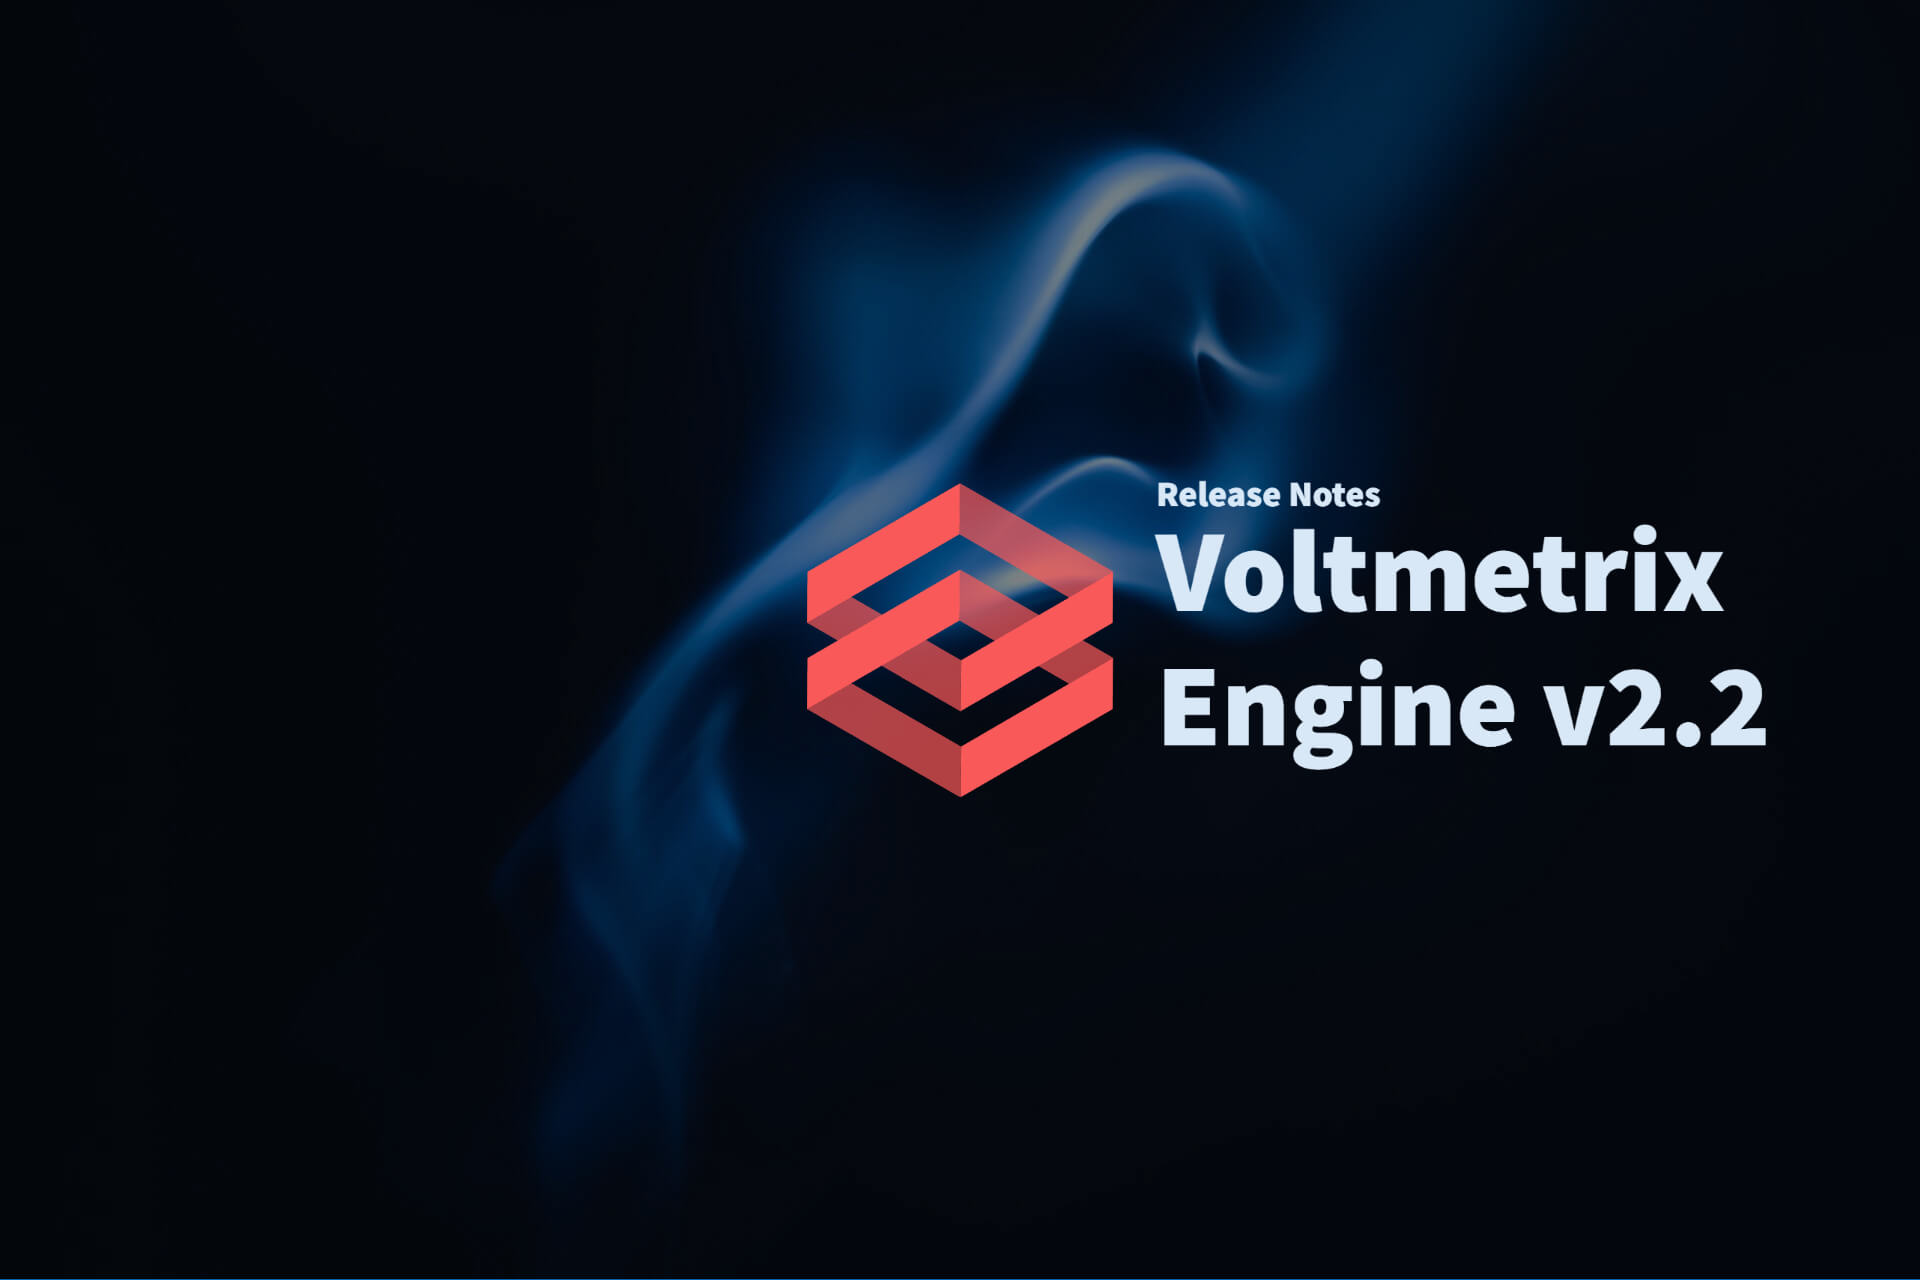 Voltmetrix Engine v2.2